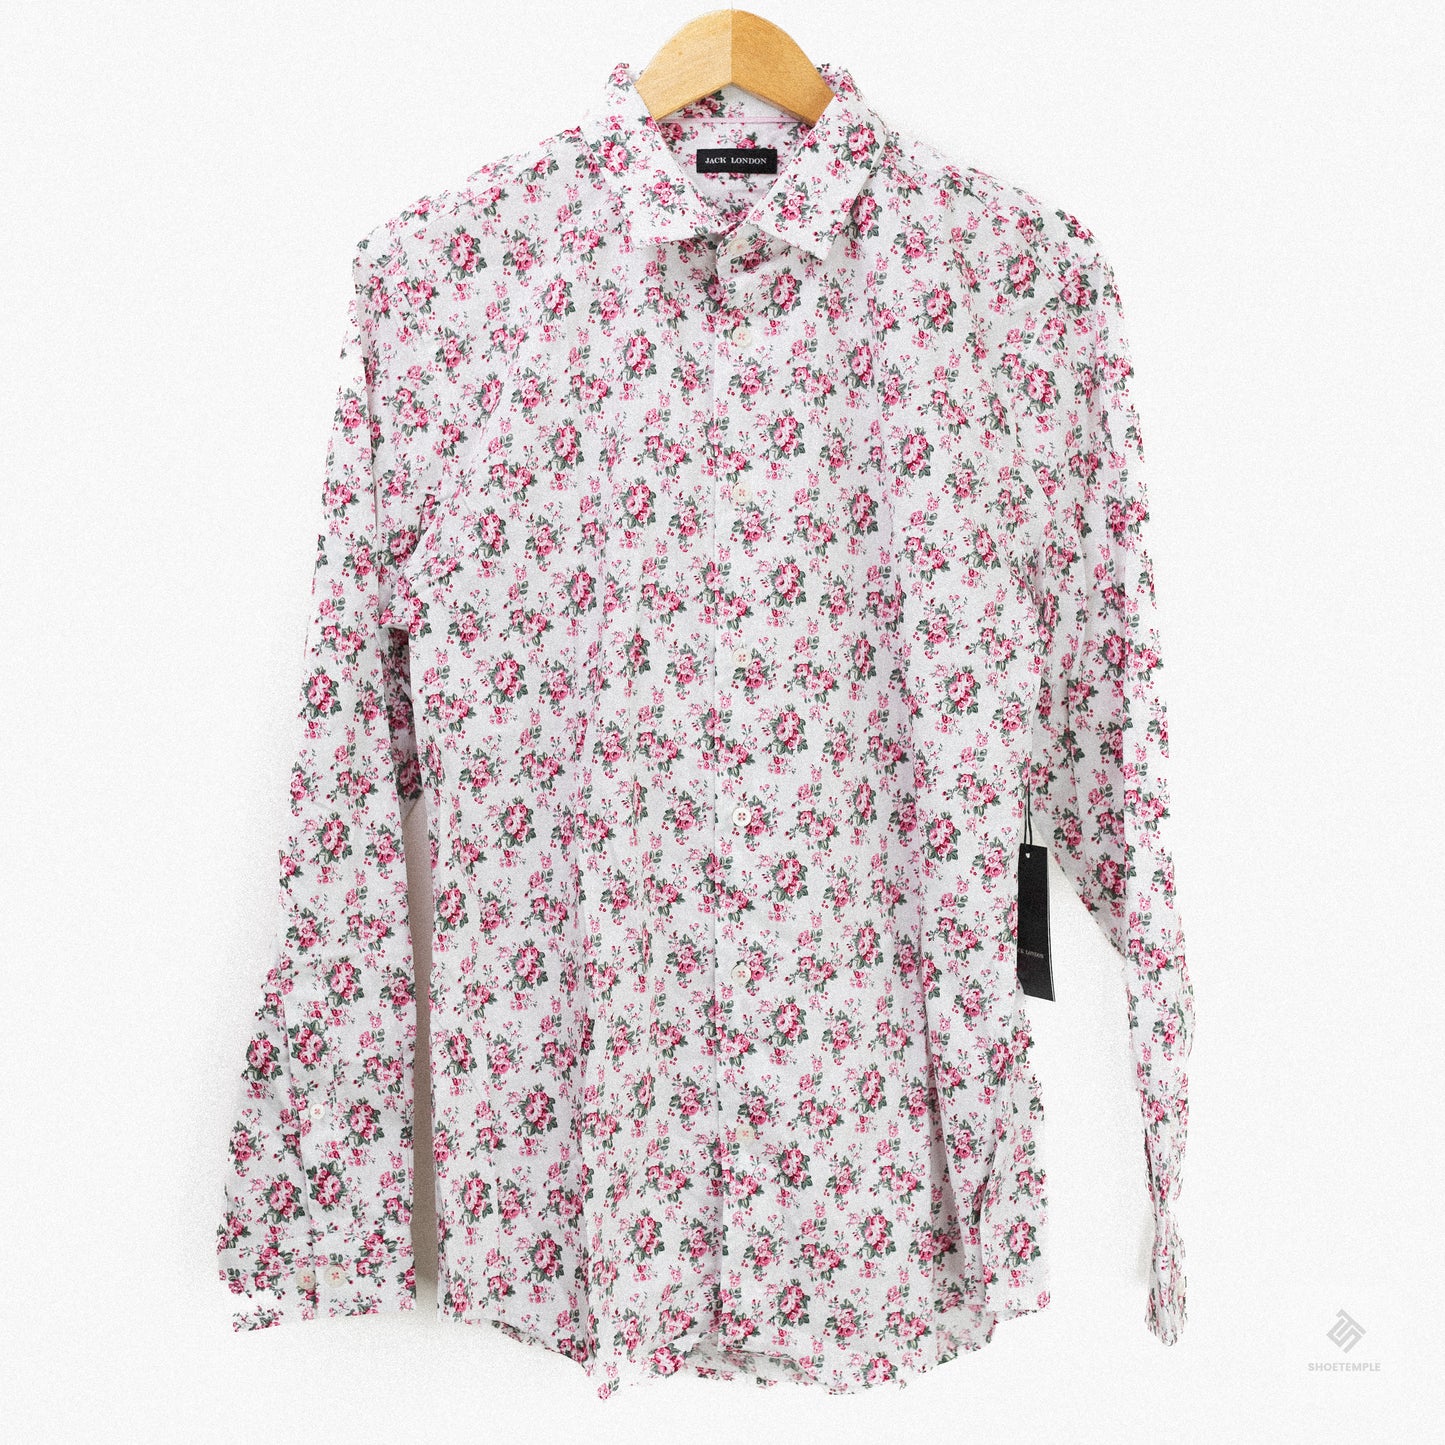 Jack London Flower Shirt